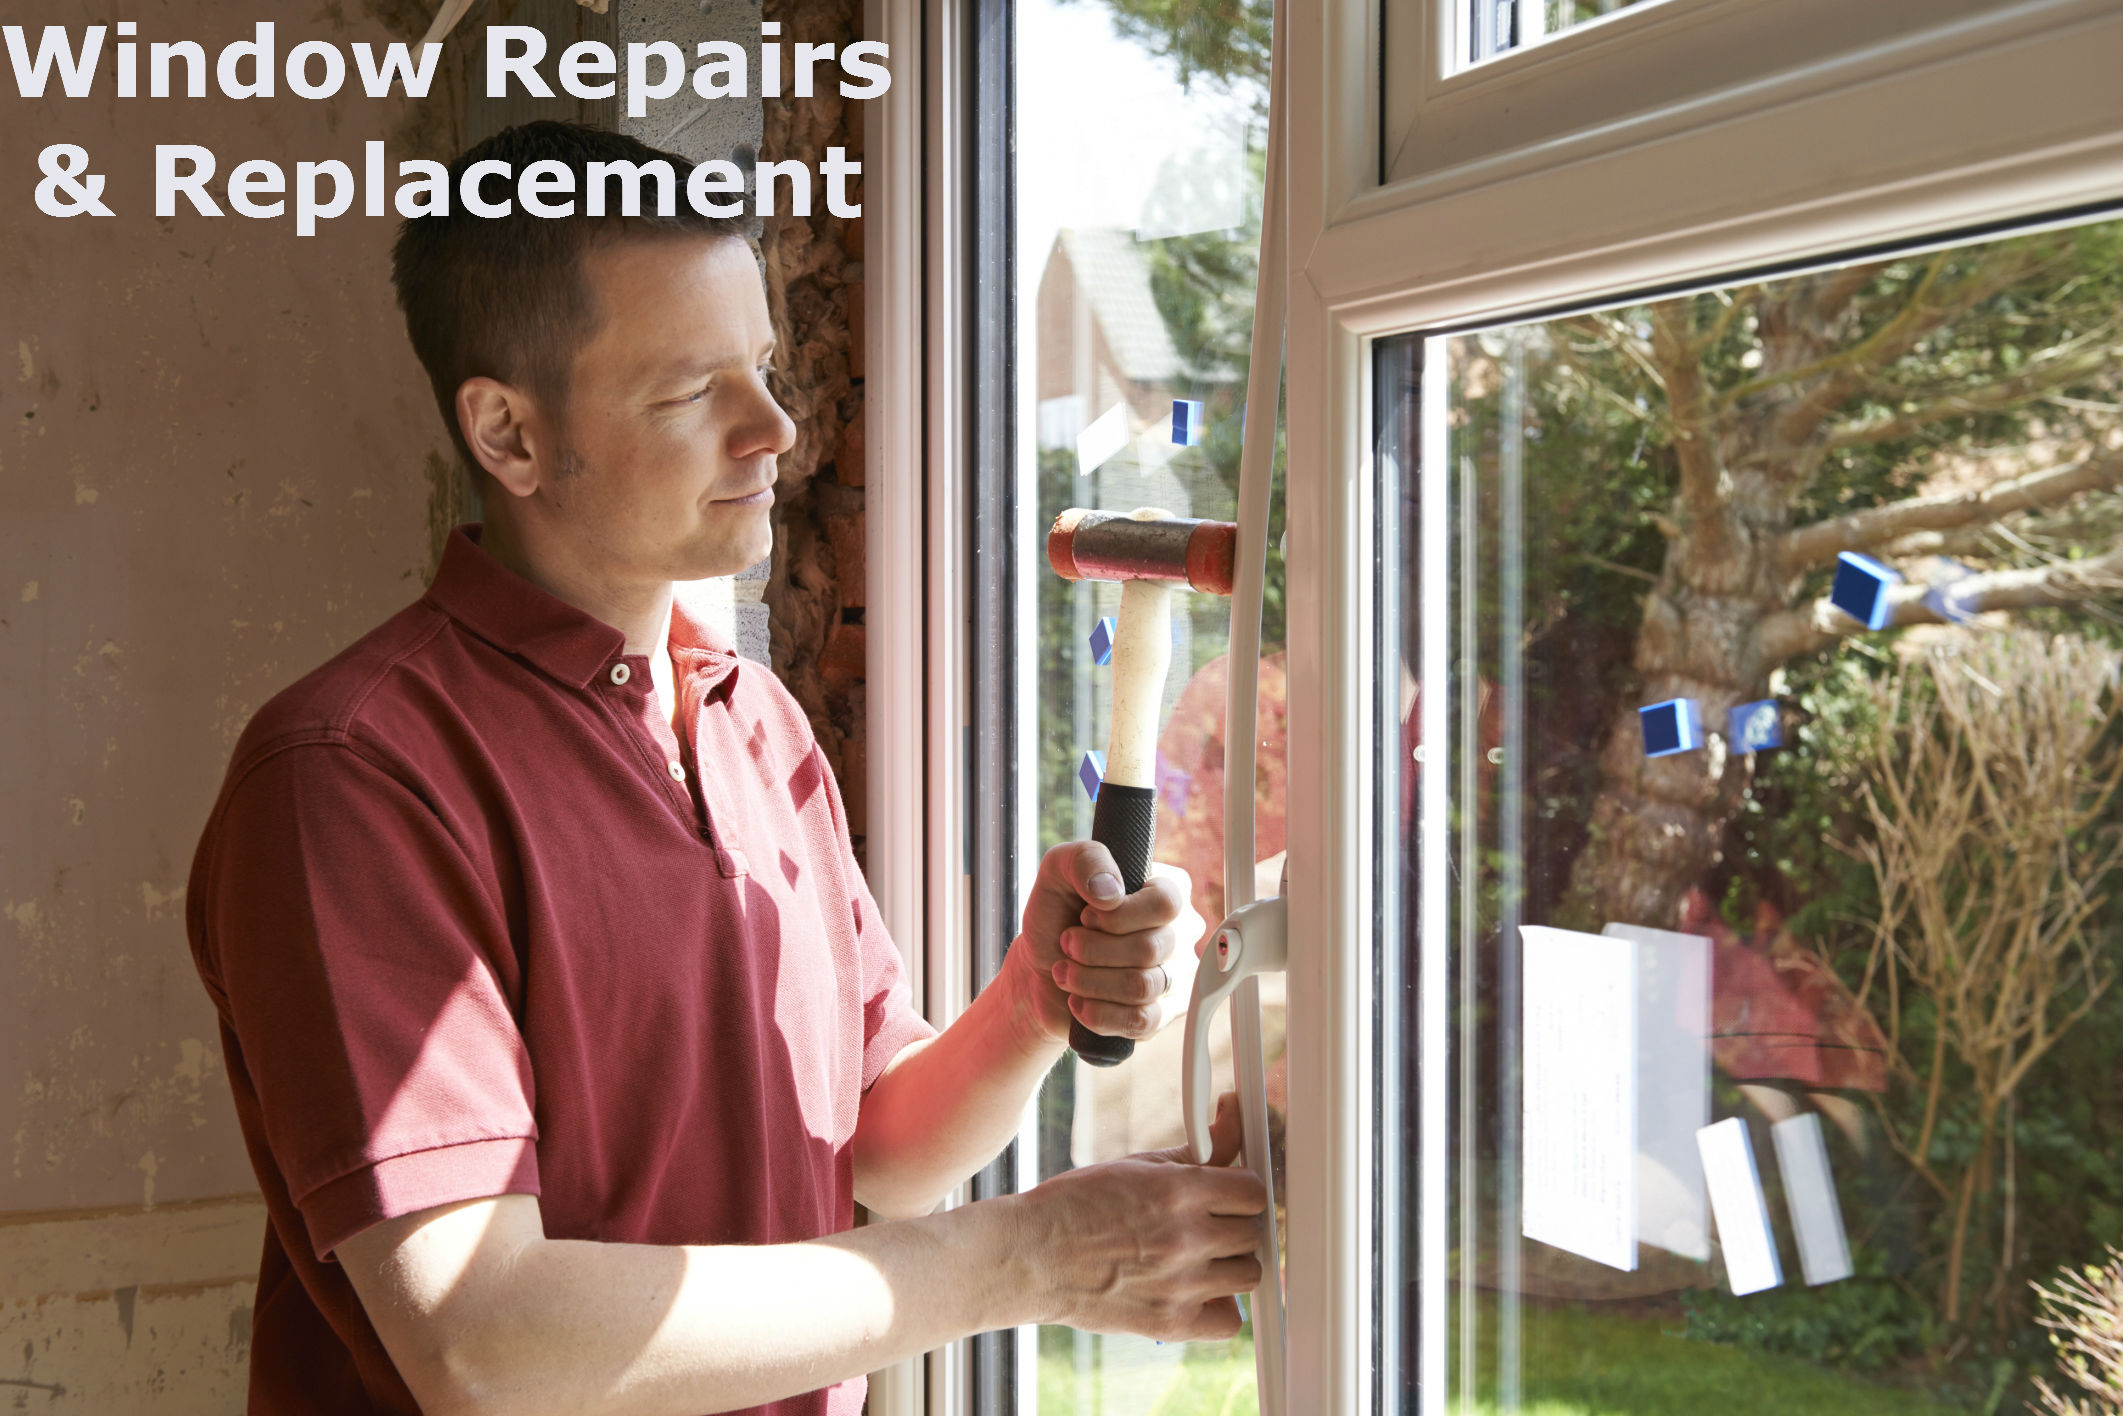 Window Repairs & Replacement